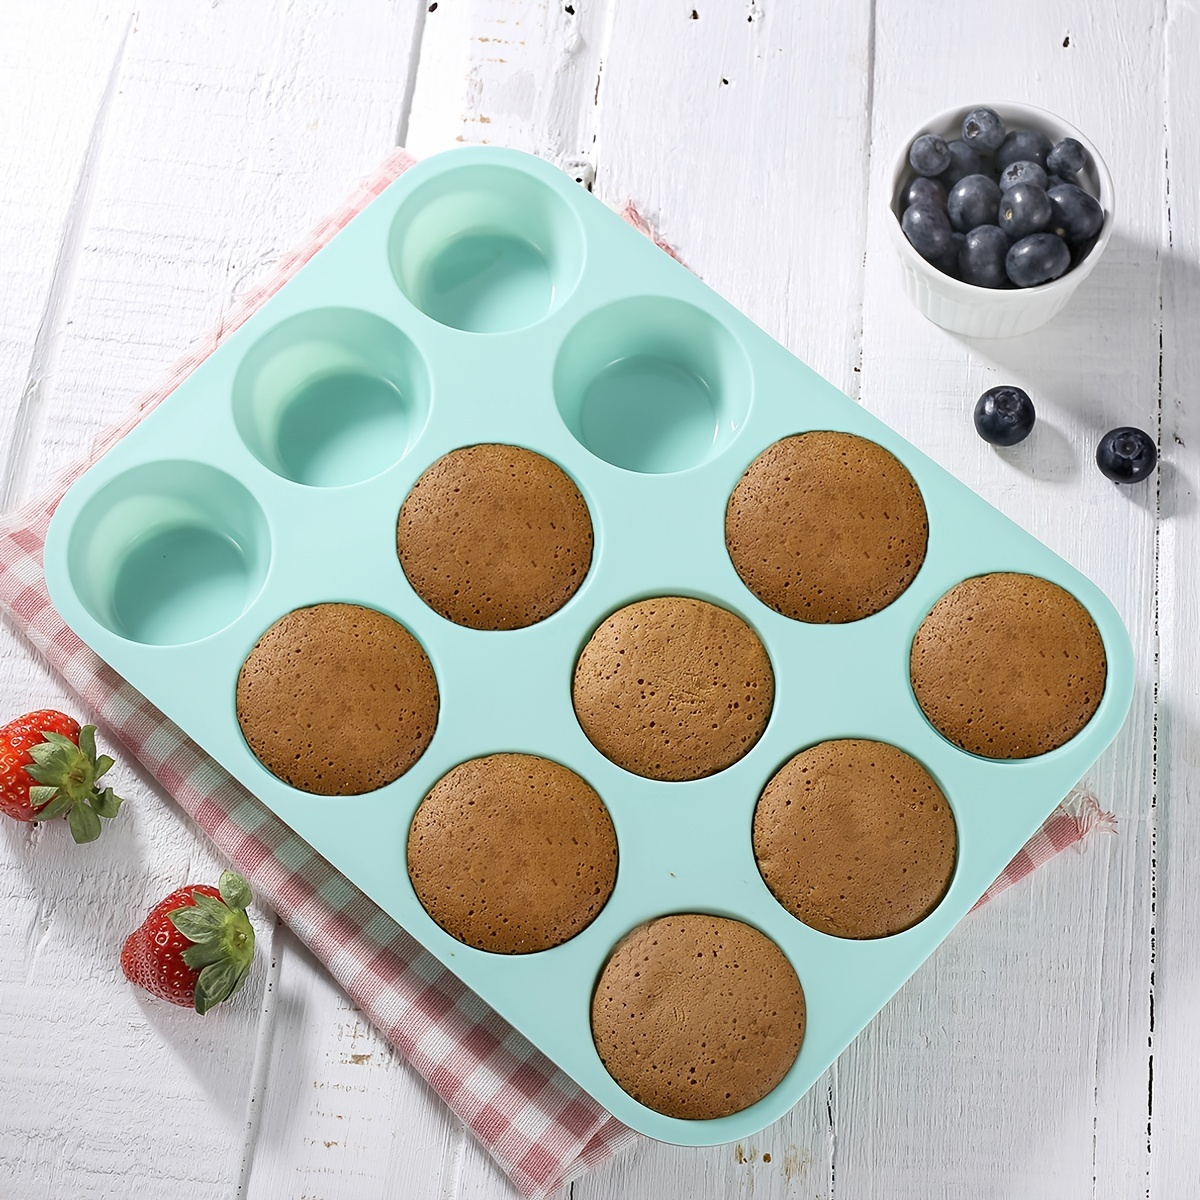 NEW KitchenAid 12 Cups Mini Muffin Nonstick Pan - Muffins Holes 2